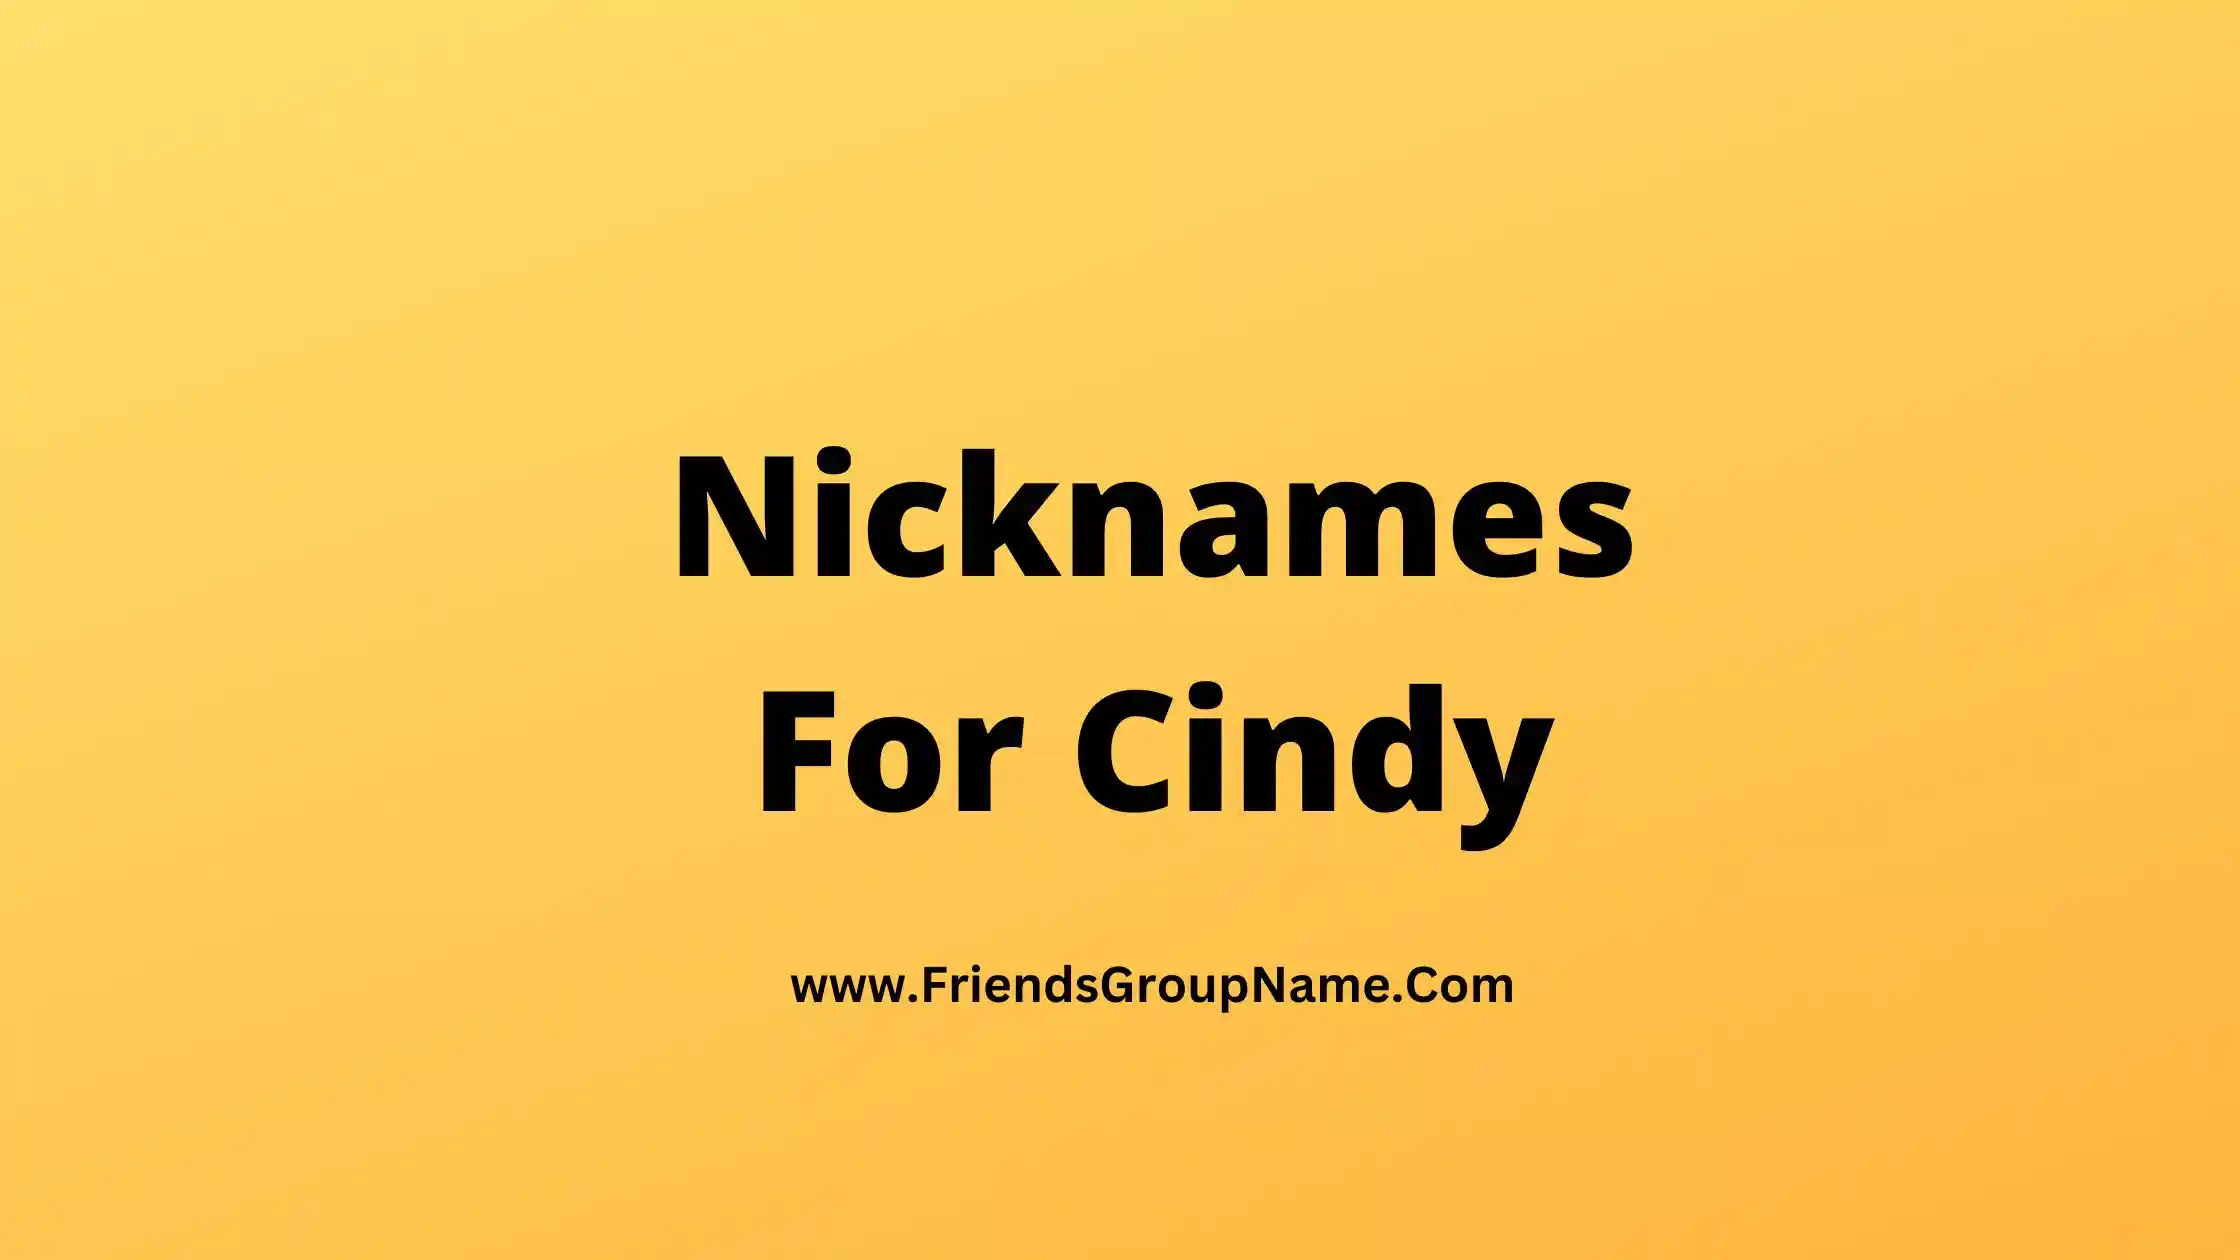 Nicknames For Cindy